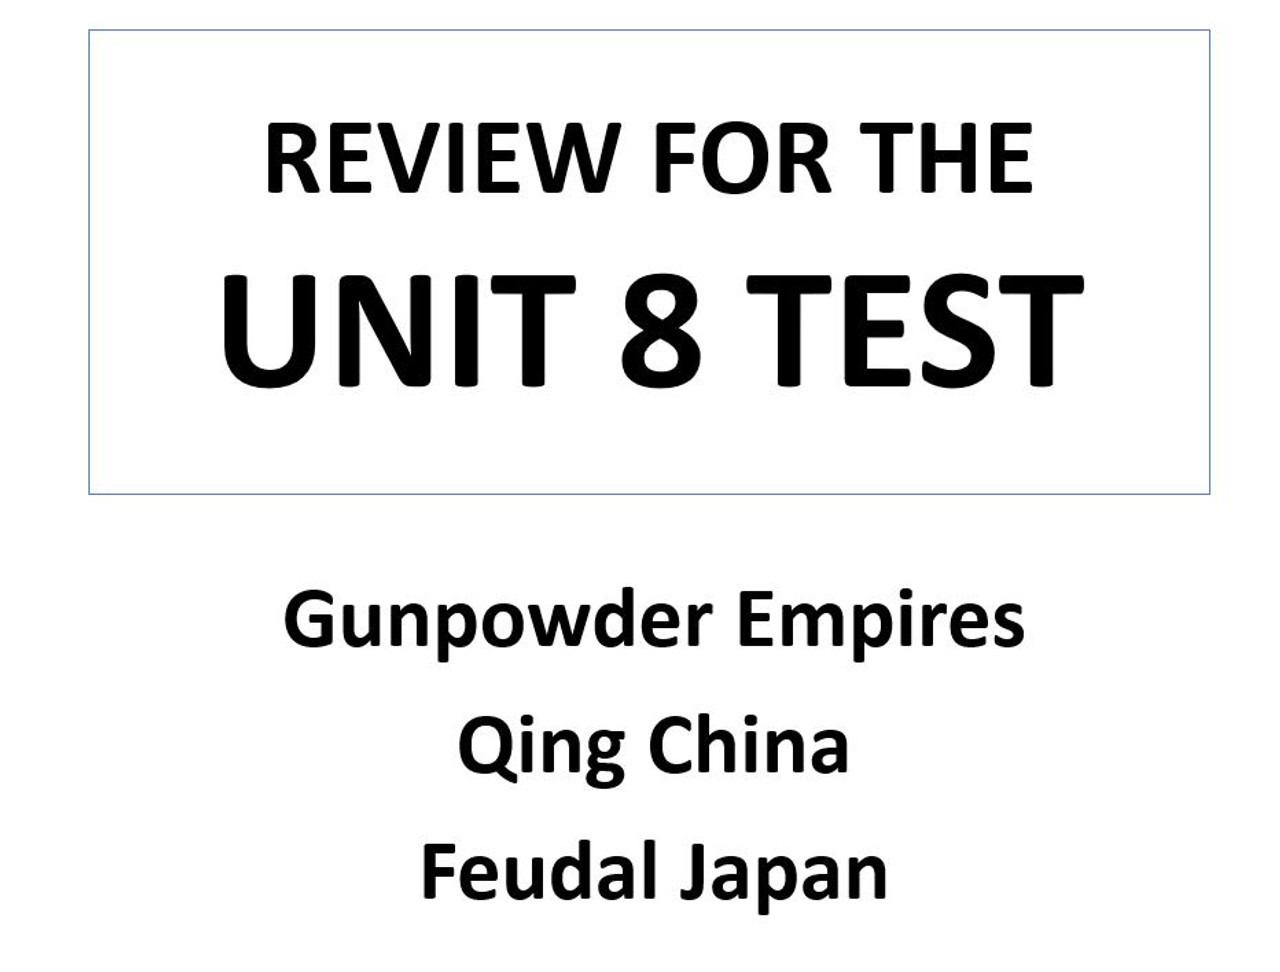 Unit 8 Test Review - Gunpowder Empires, Qing China, Feudal Japan